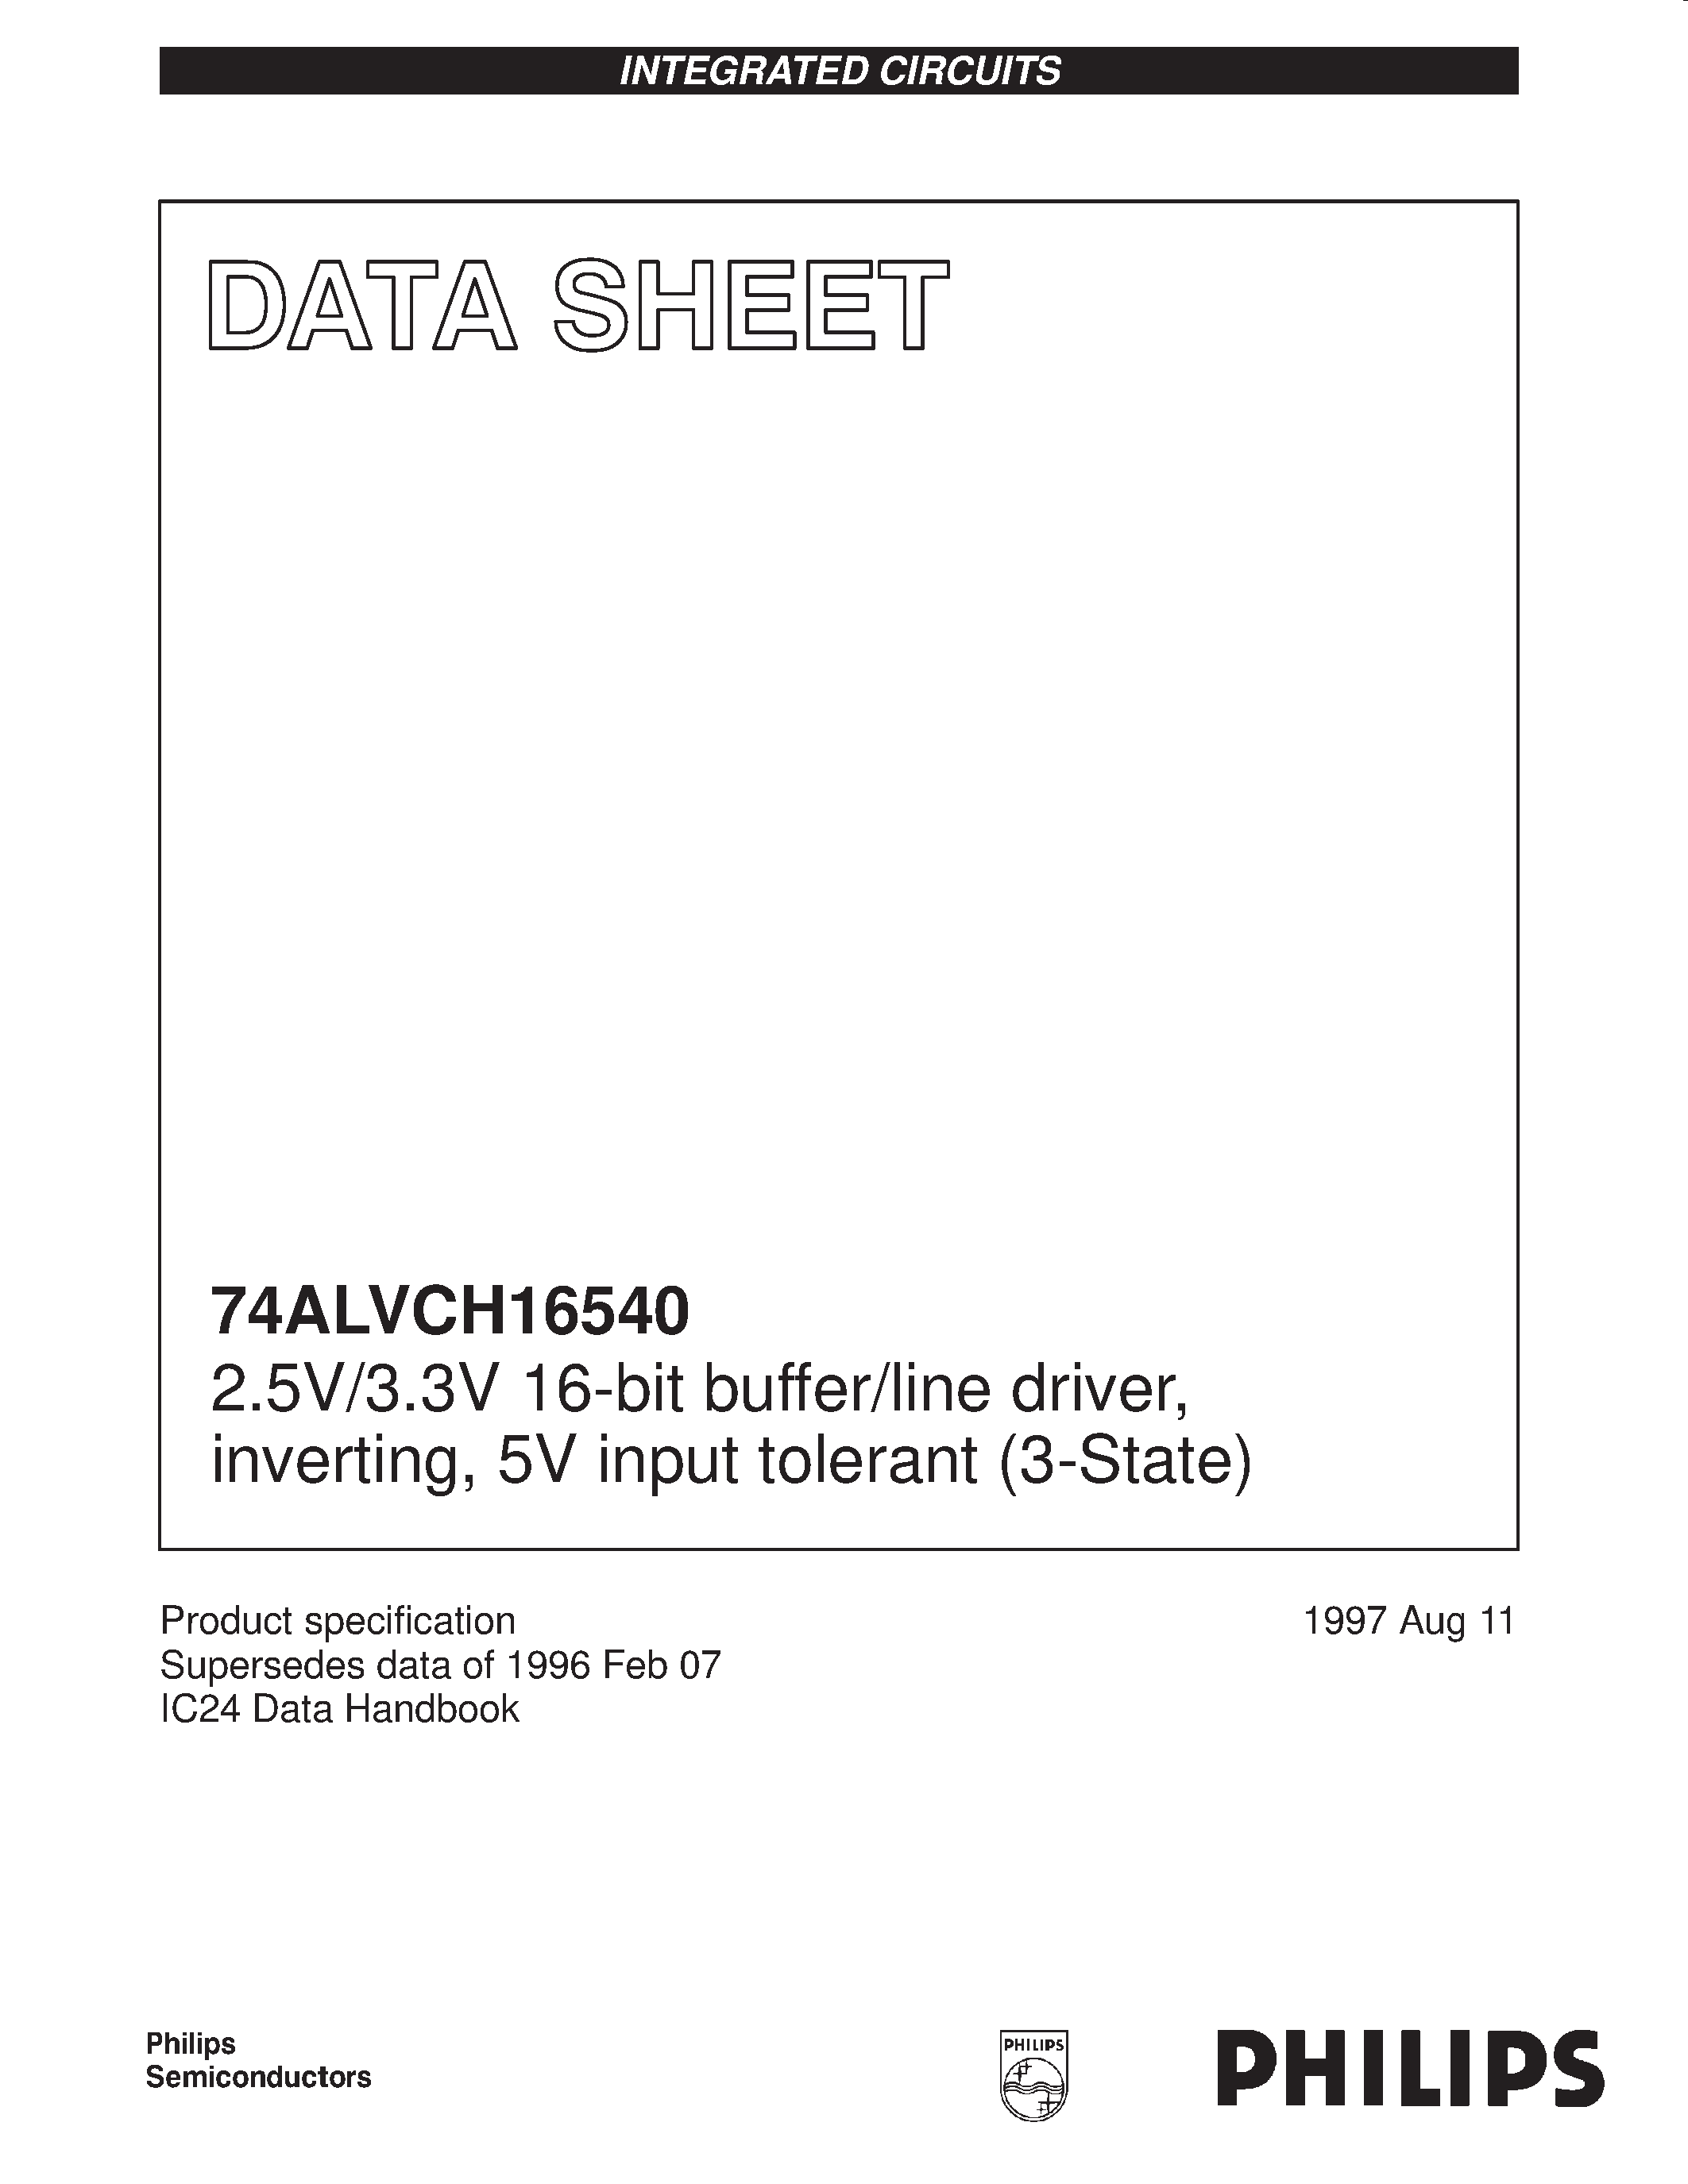 Datasheet 74ALVCH16540DL - 2.5V/3.3V 16-bit buffer/line driver/ inverting/ 5V input tolerant 3-State page 1